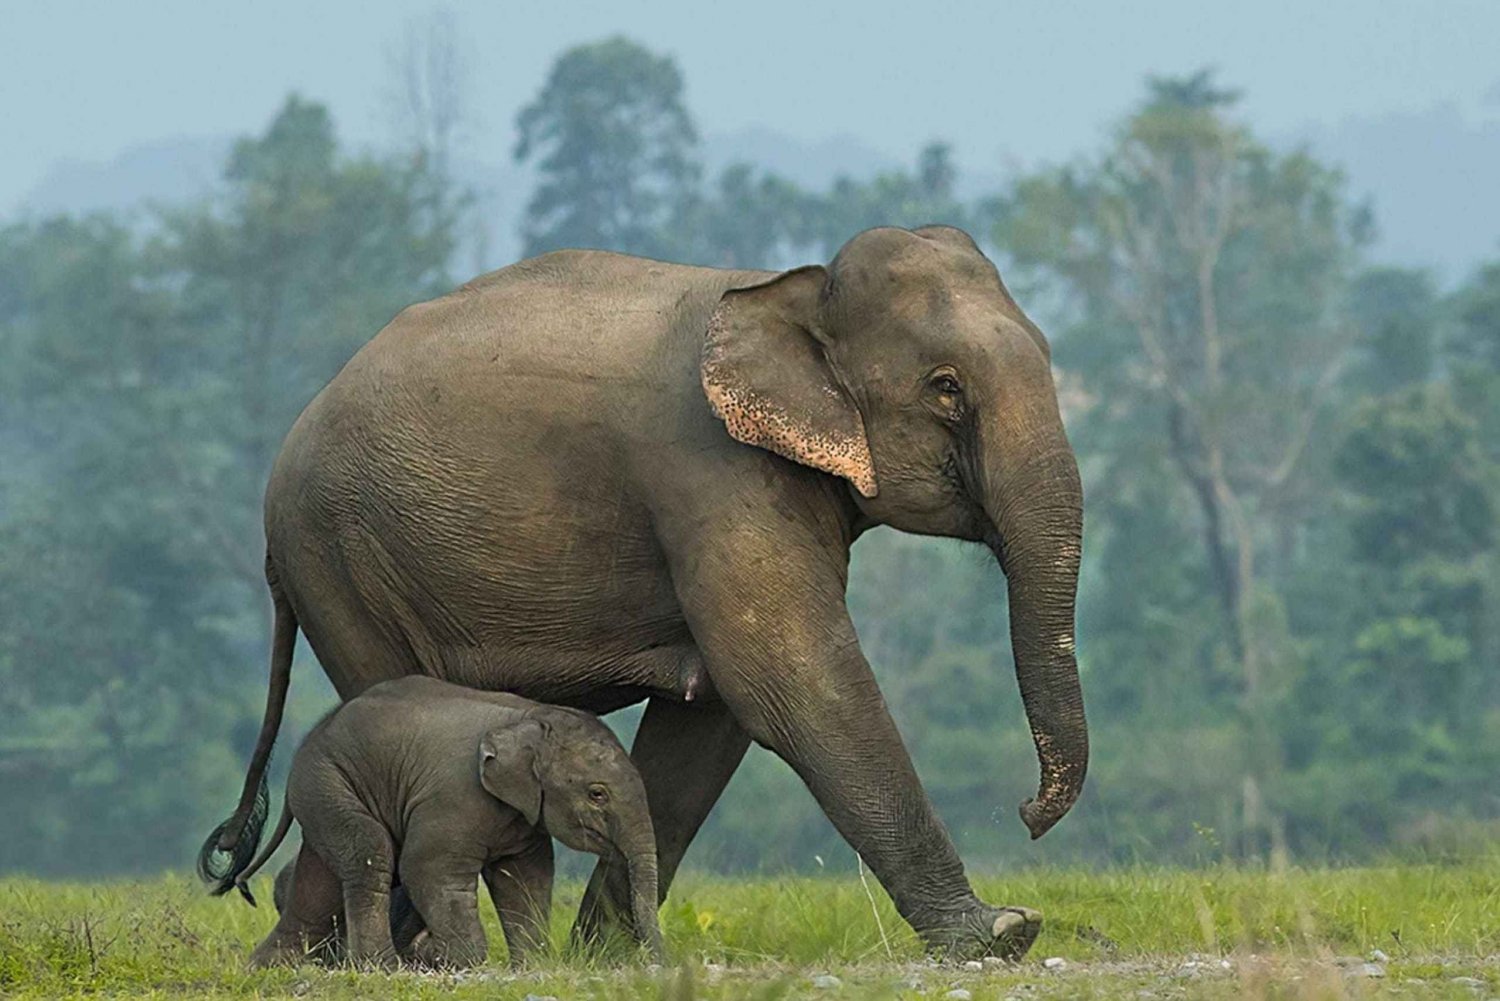 Vanuit Bangkok: ElephantsWorld Kanchanaburi 2-daagse ervaring